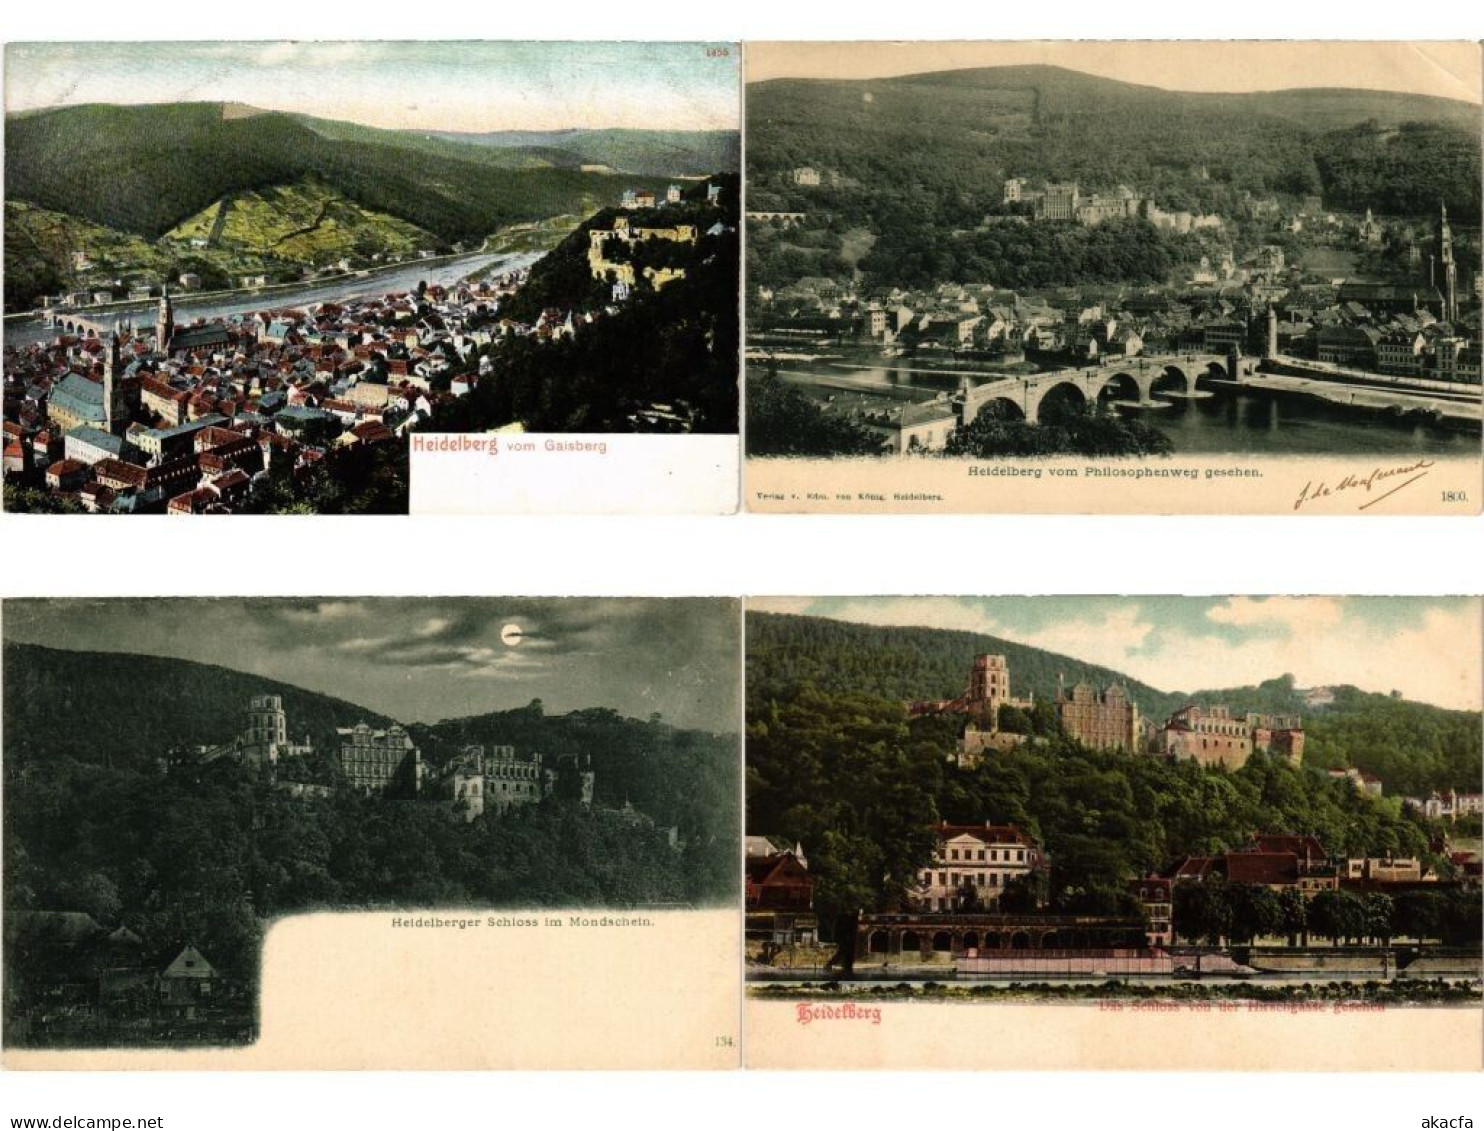 HEIDELBERG Germany 51 Vintage Postcards Mostly pre-1920 (L6575)